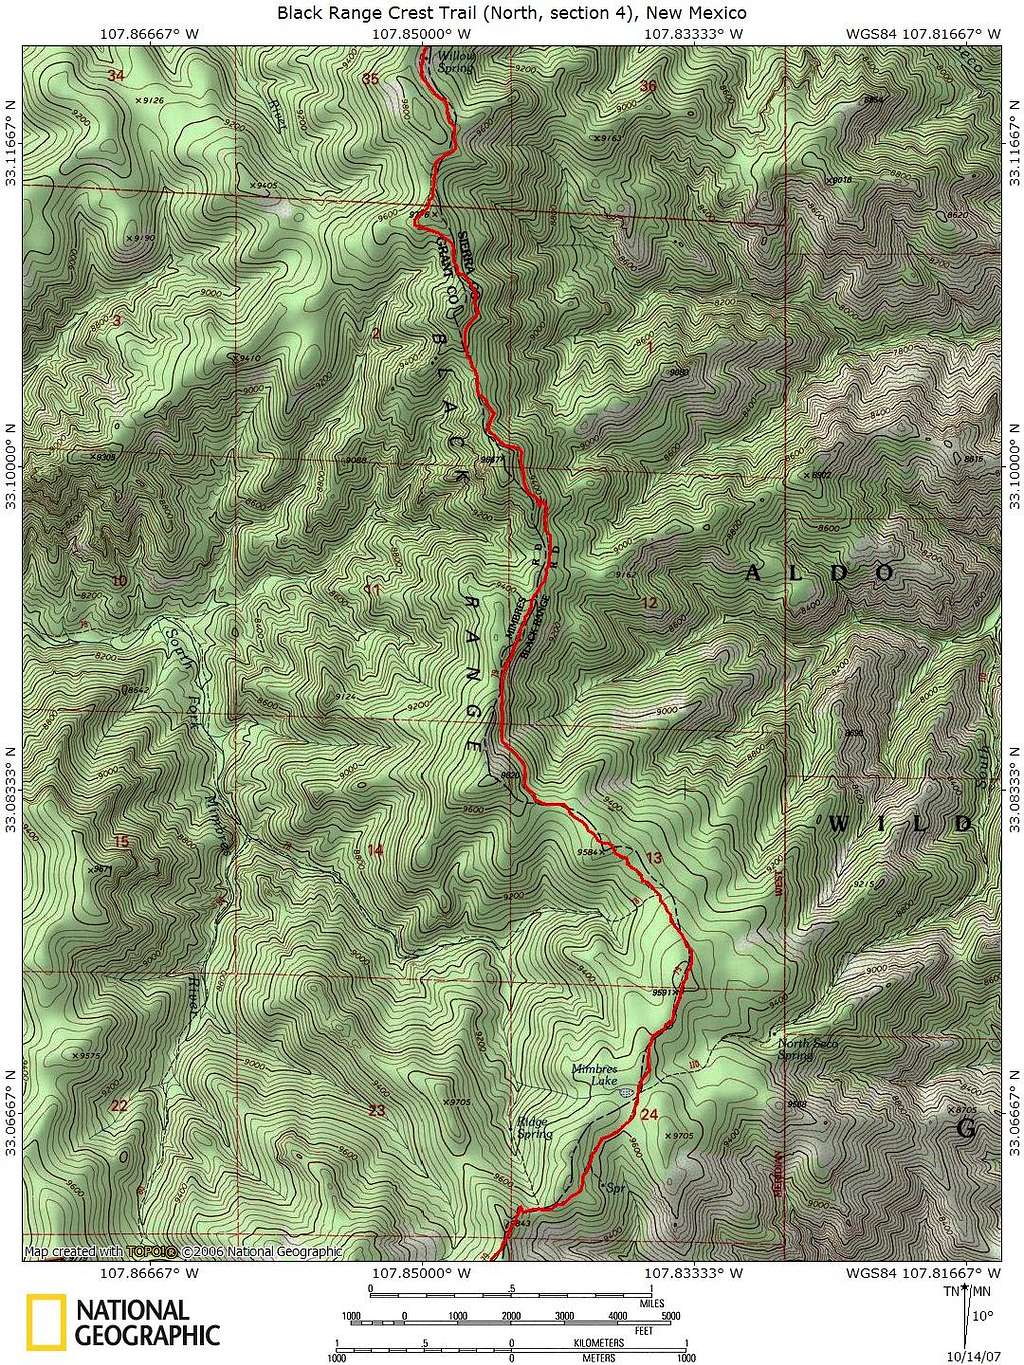 Black Range Crest Trail (North, section 4)